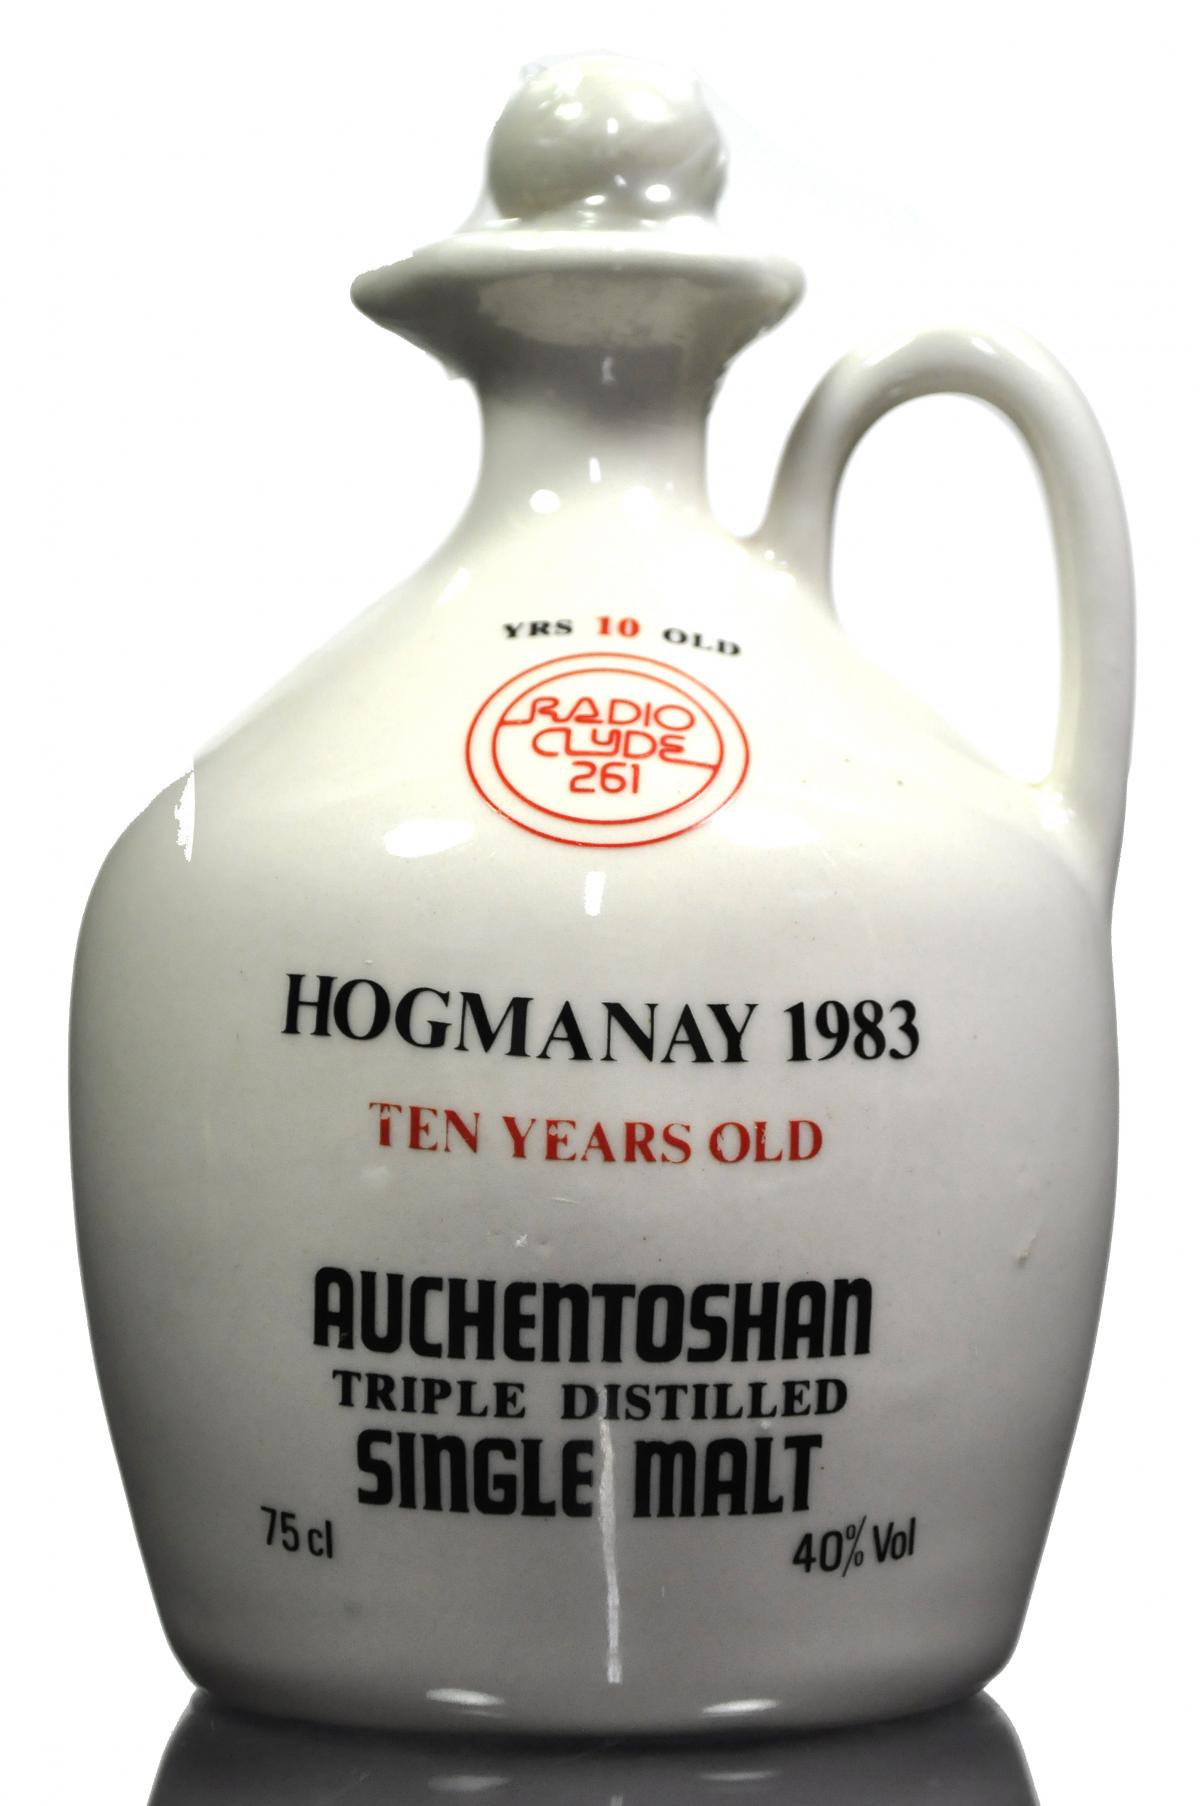 Auchentoshan Radio Clyde 261 - Hogmanay 1983 Ceramic